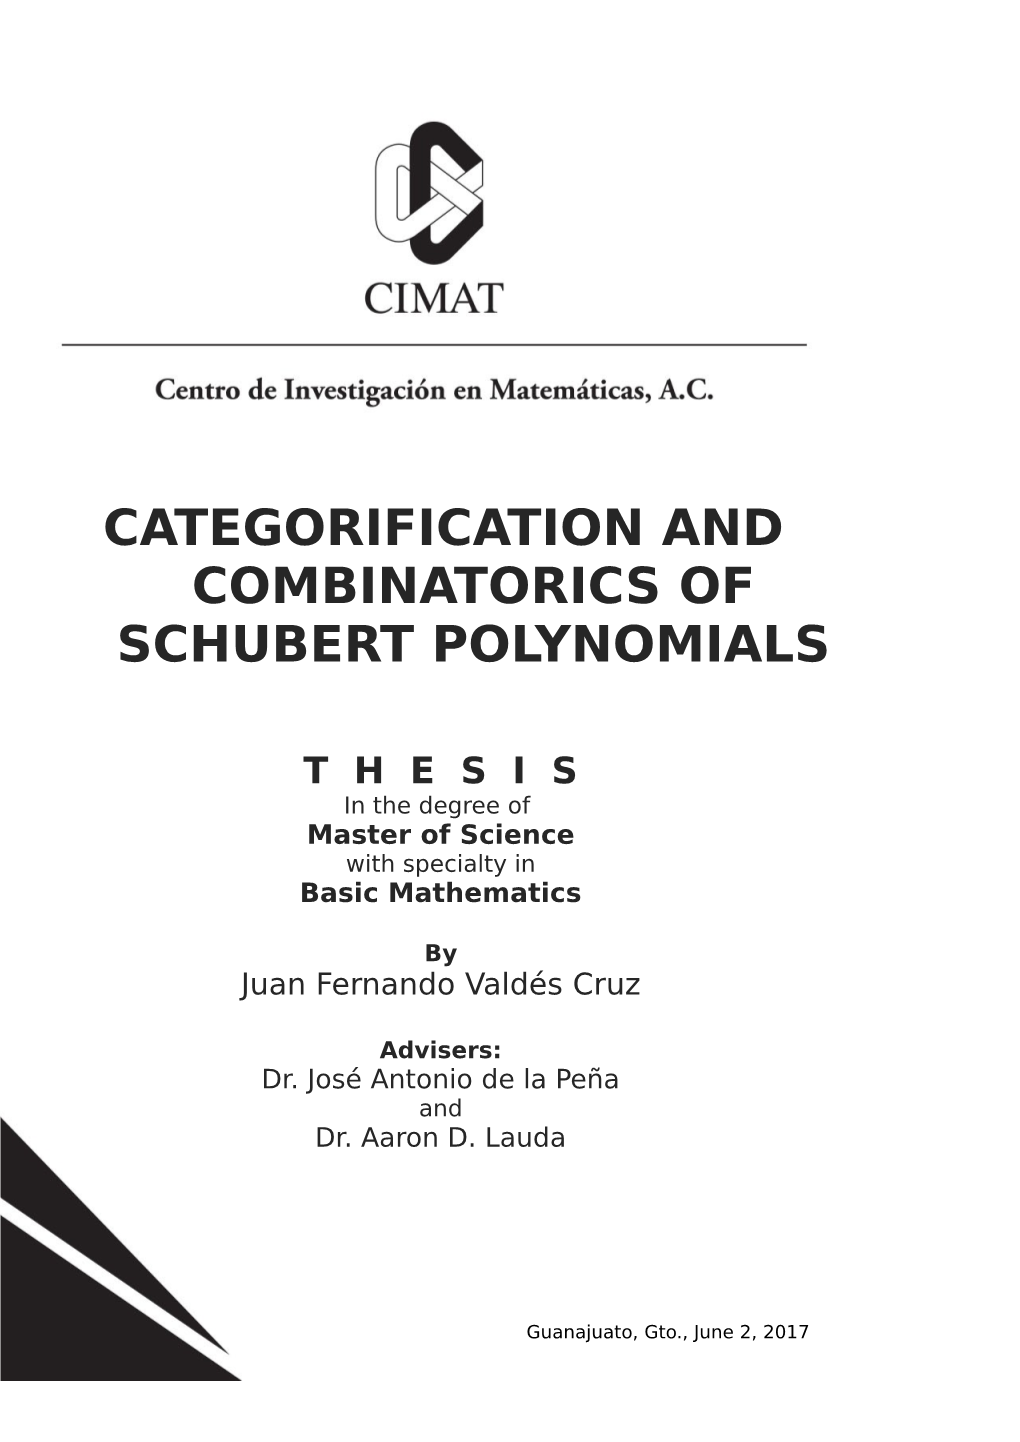 Categorification and Combinatorics of Schubert Polynomials